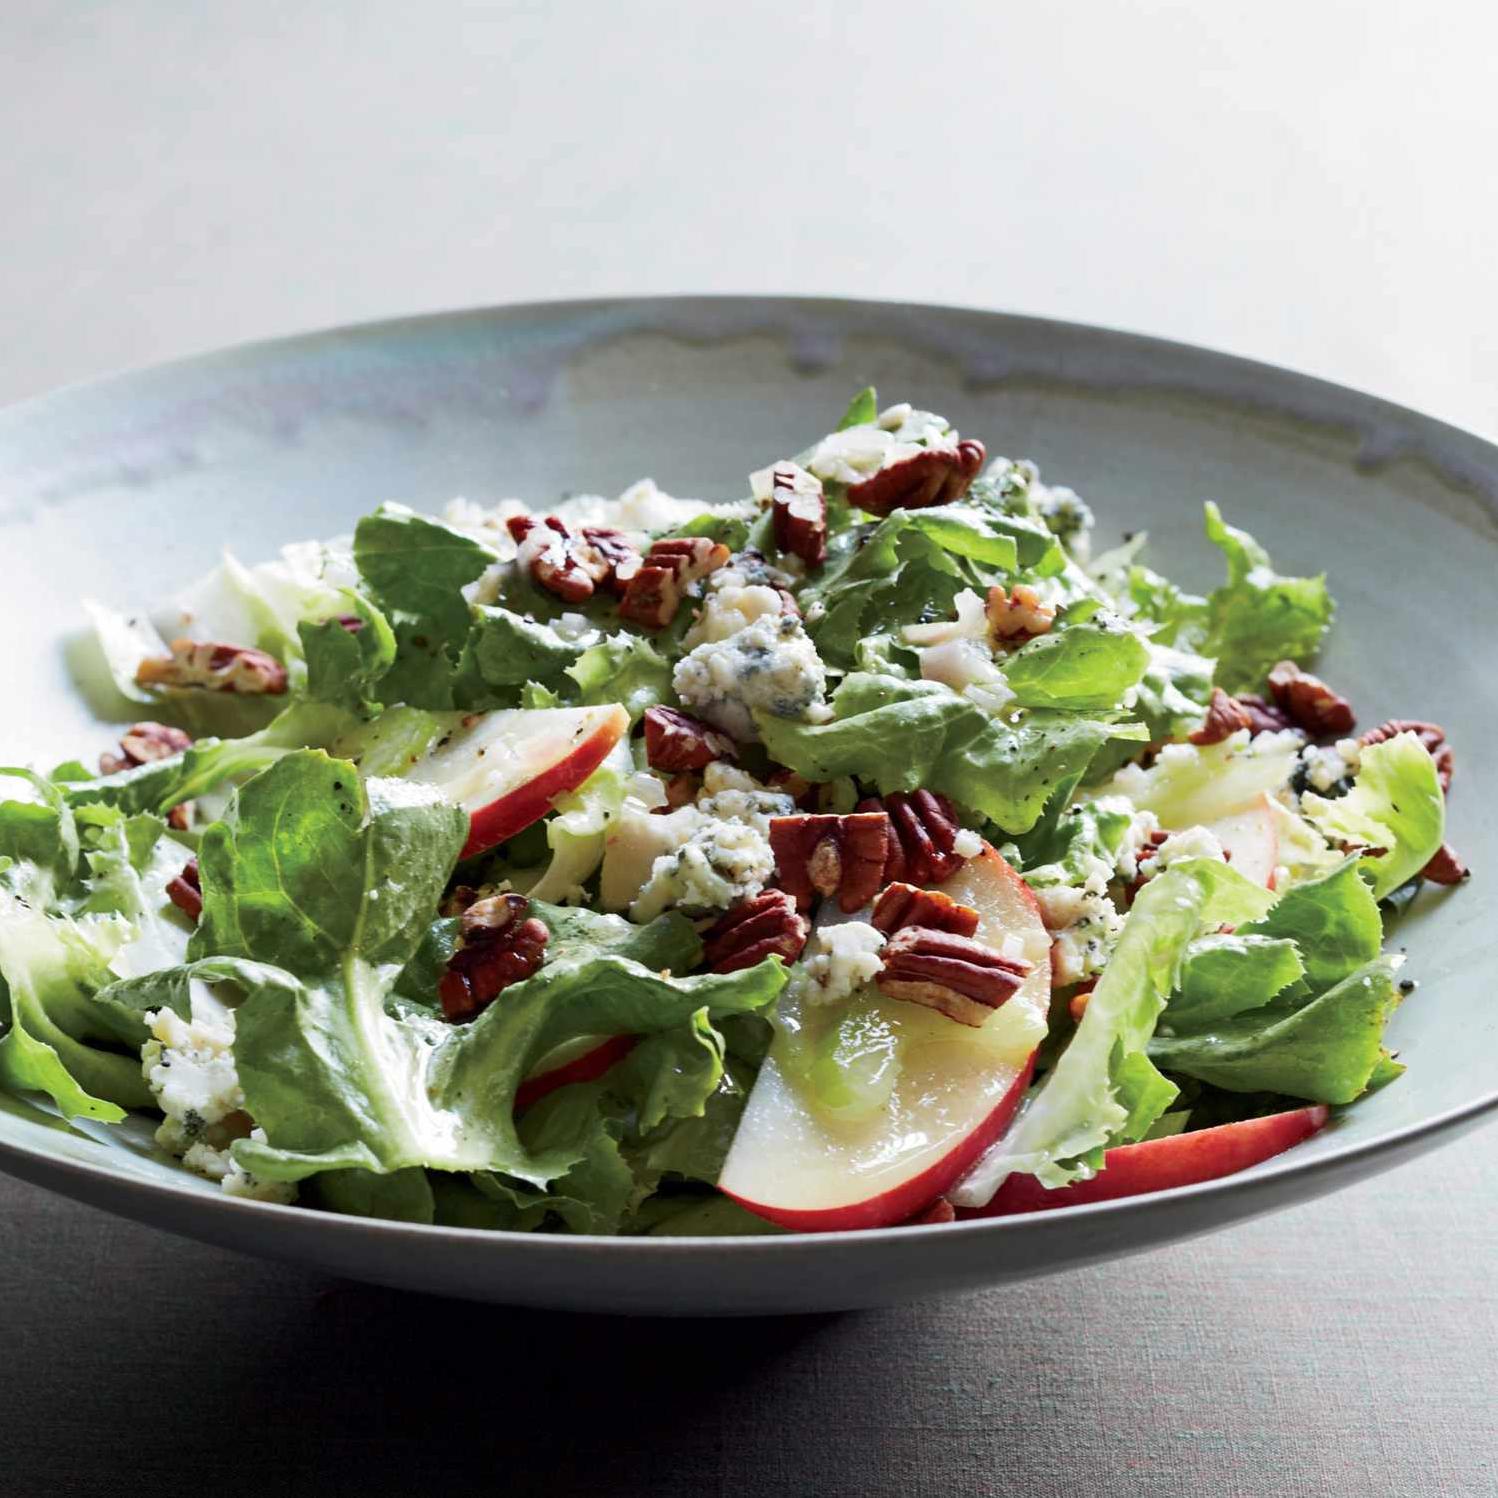  A must-try award-winning Escarole Salad